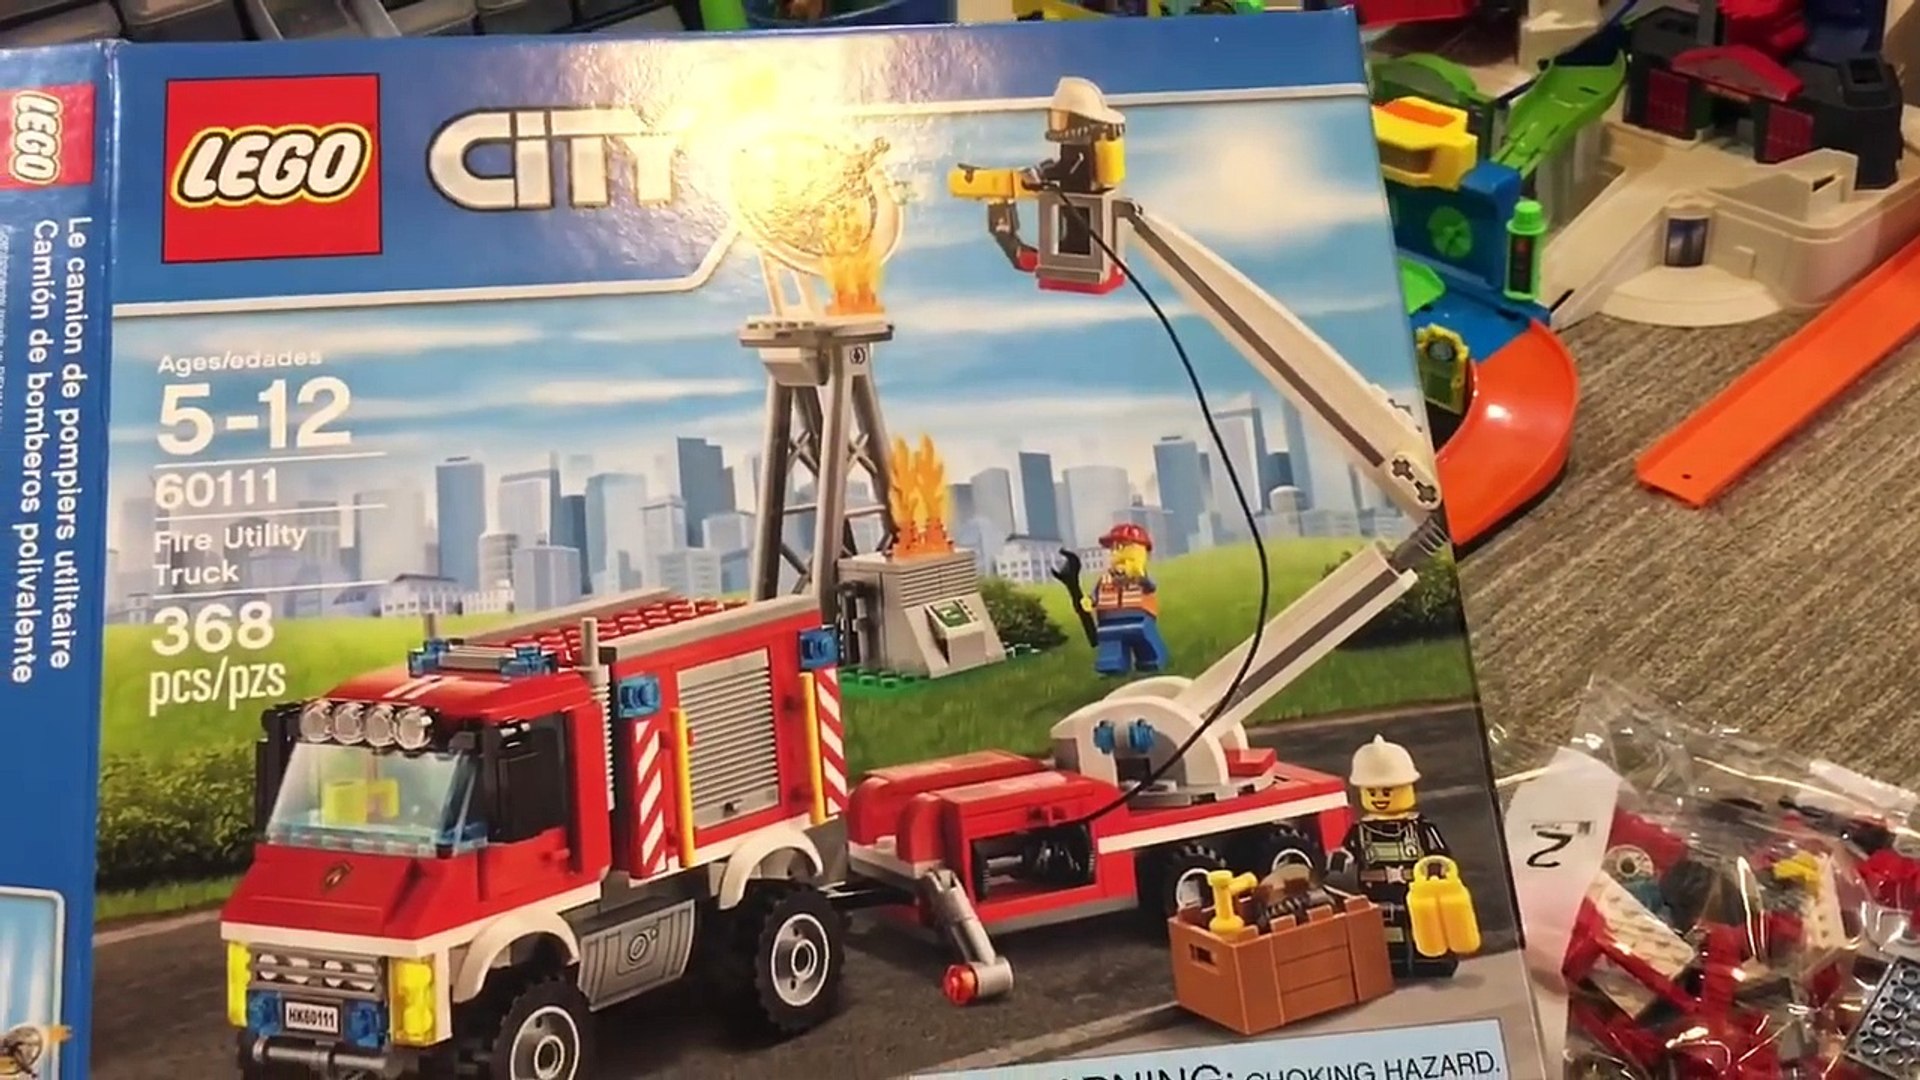 LEGO City Fire Utility Truck Set #60111